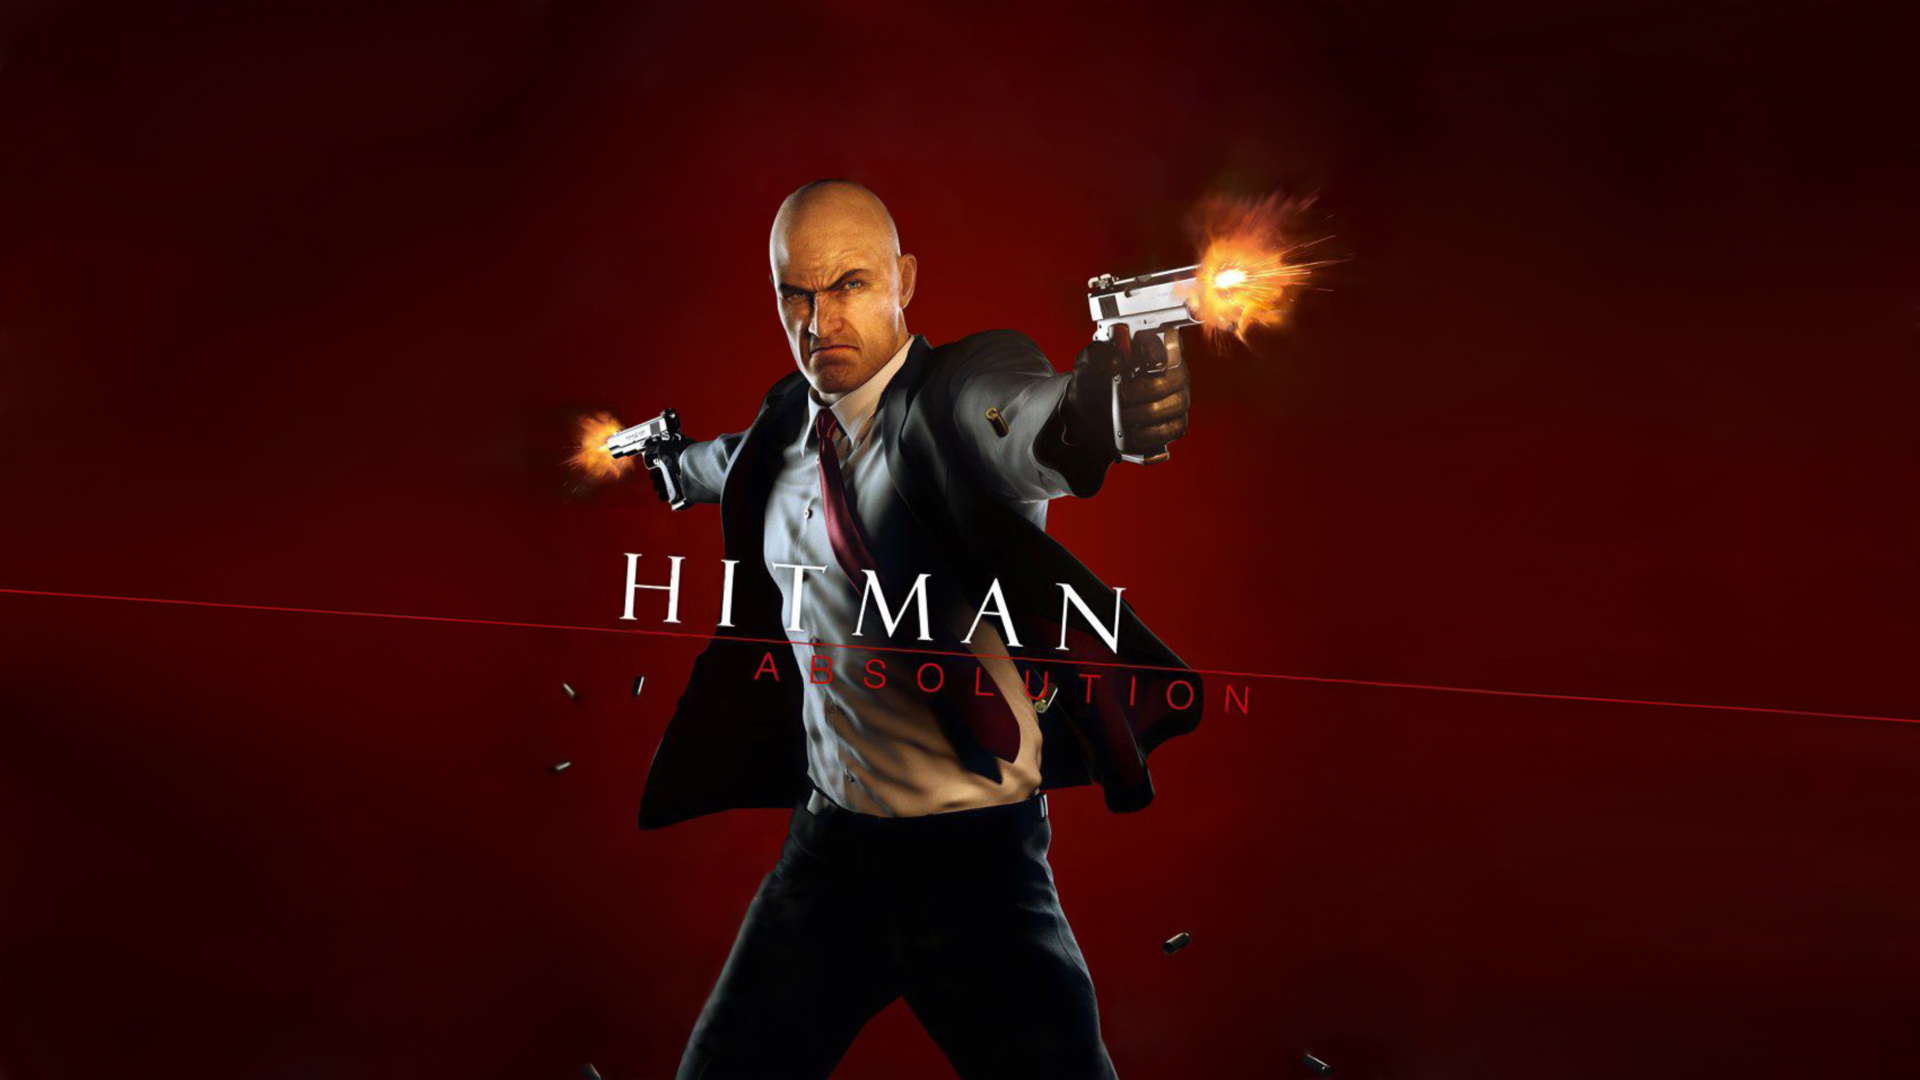 Hitman: Absolution, Stealthy assassin, Intense action, Heart-pounding adventure, 1920x1080 Full HD Desktop